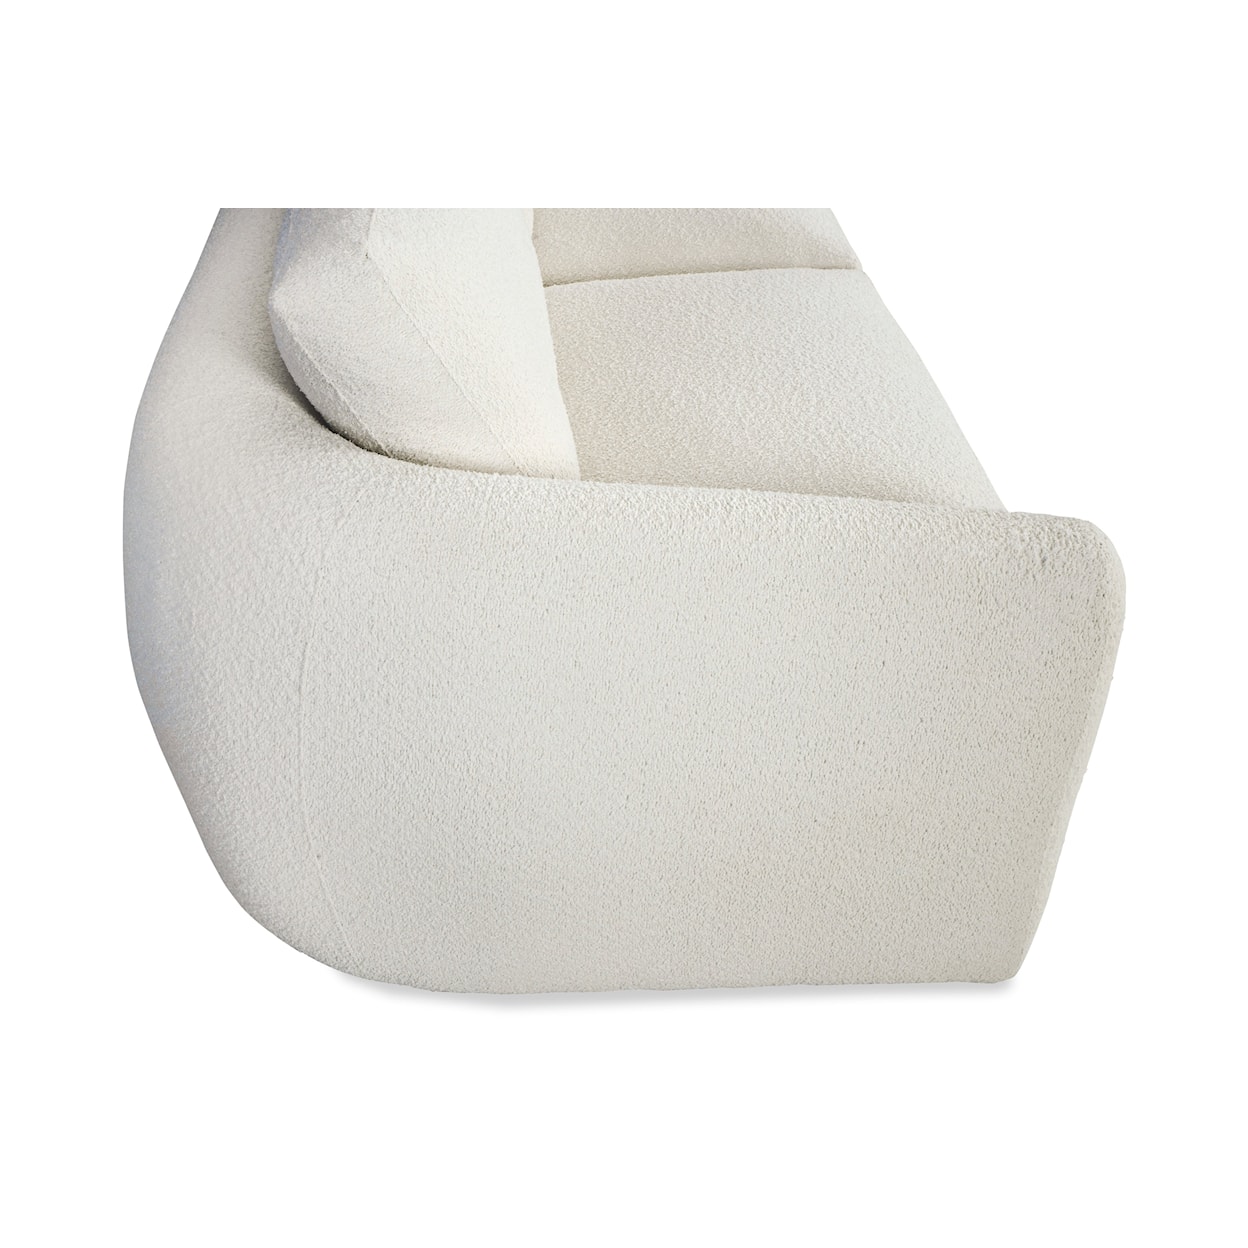 Hickory Craft 731850BD 2-Cushion Sofa